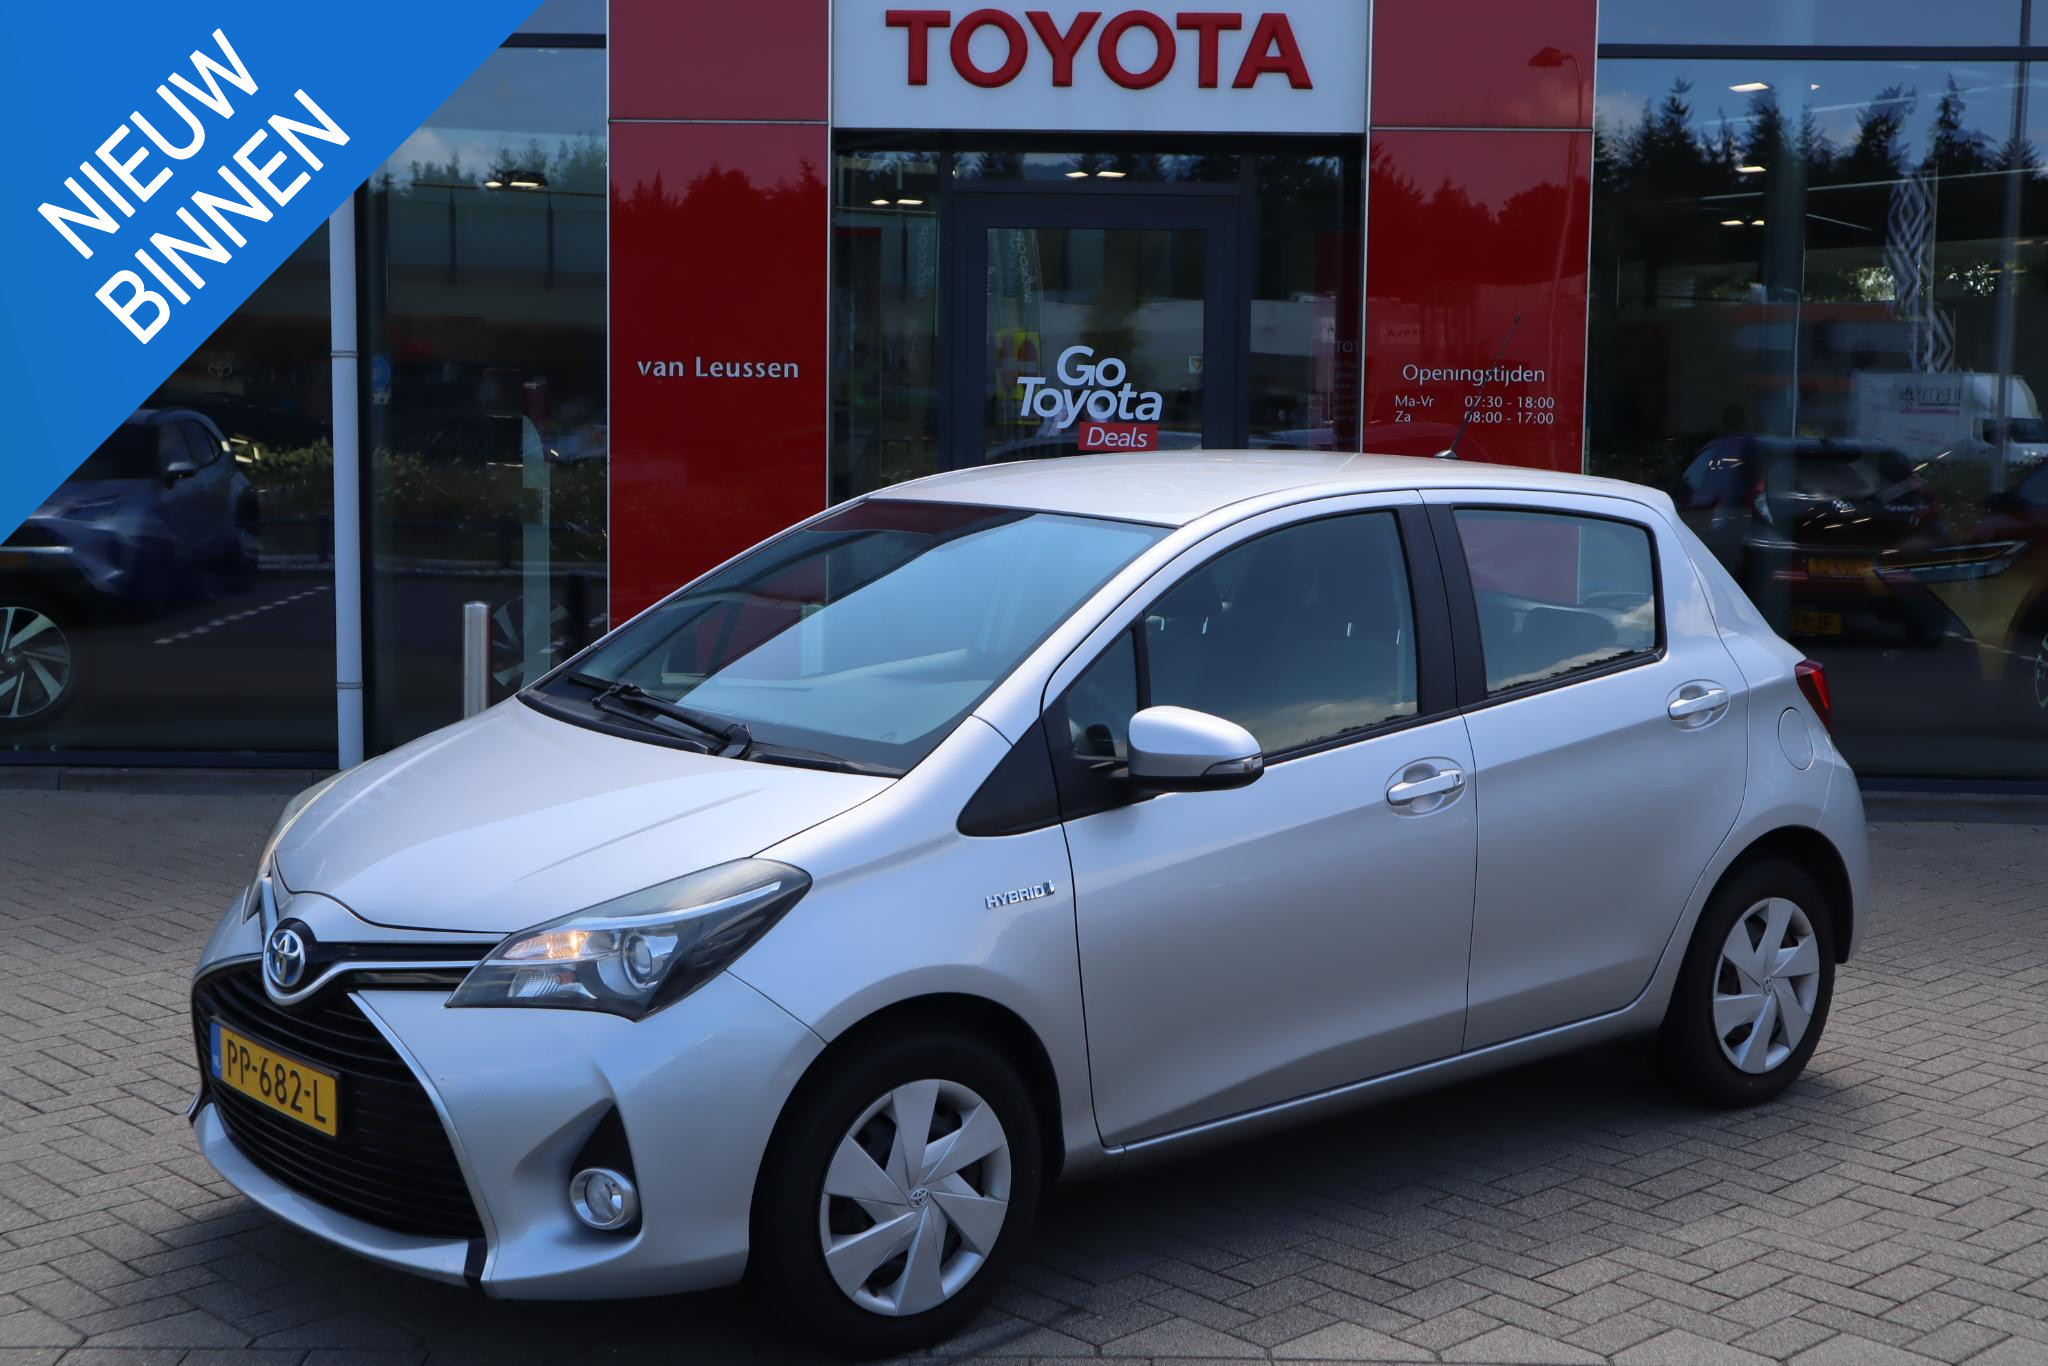 Toyota Yaris 1.5 Hybrid Aspiration